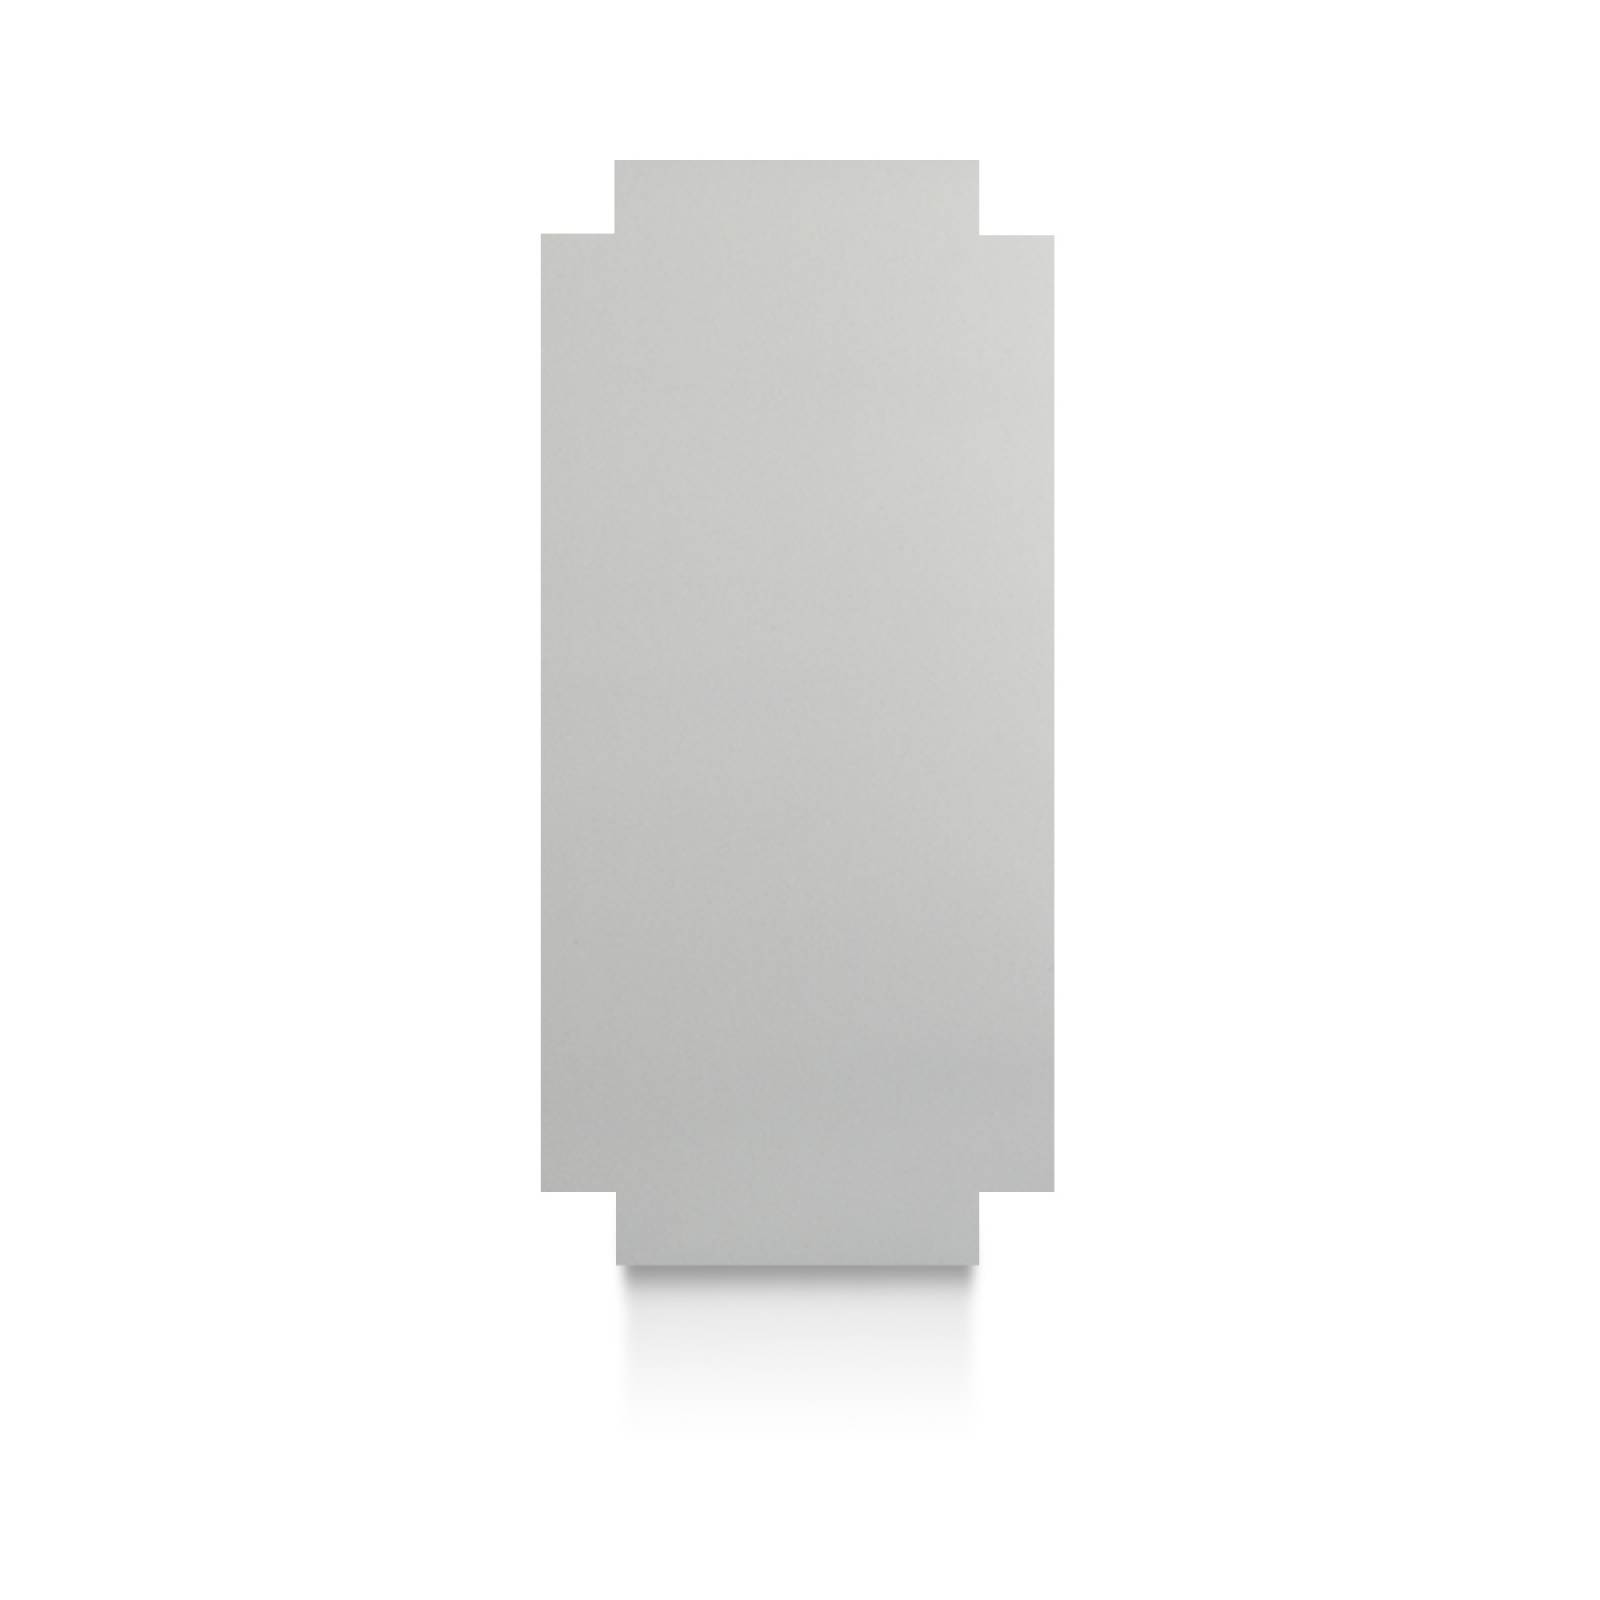 Aislante Cerámico Protector Térmico para Pared de 75 x 35 cm Blanco, Mod: 6PTPBl